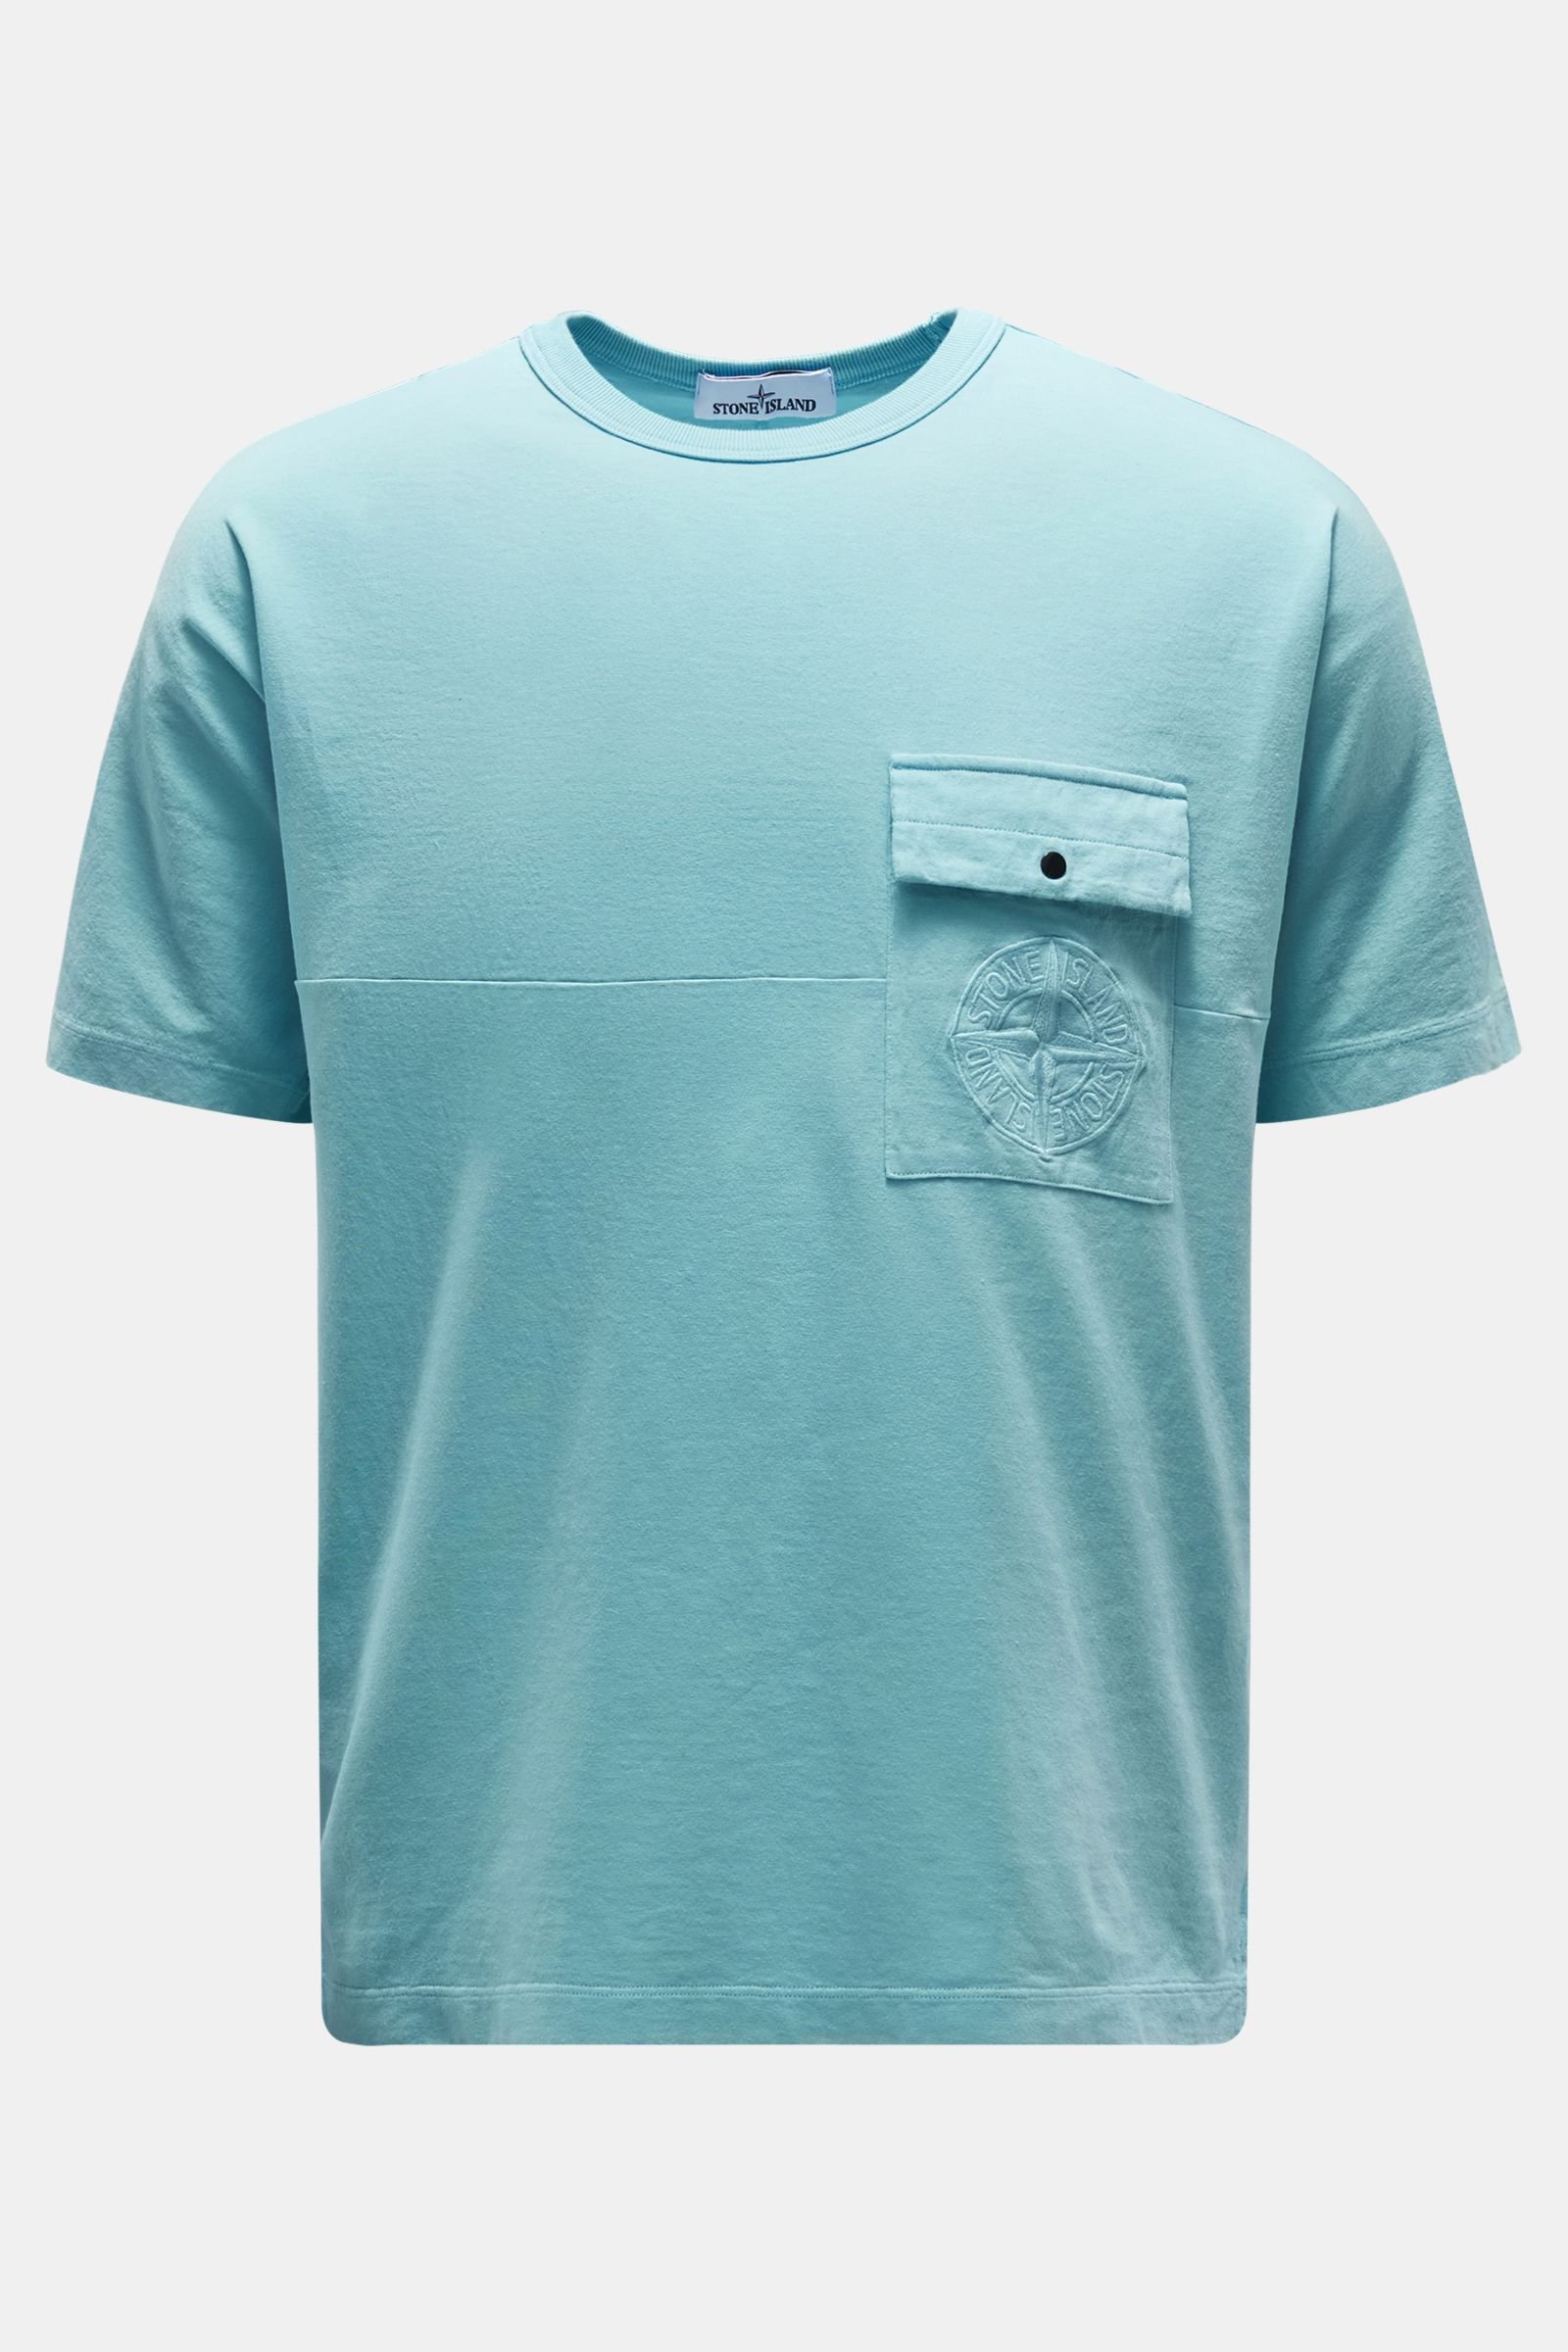 Crew neck T-shirt turquoise